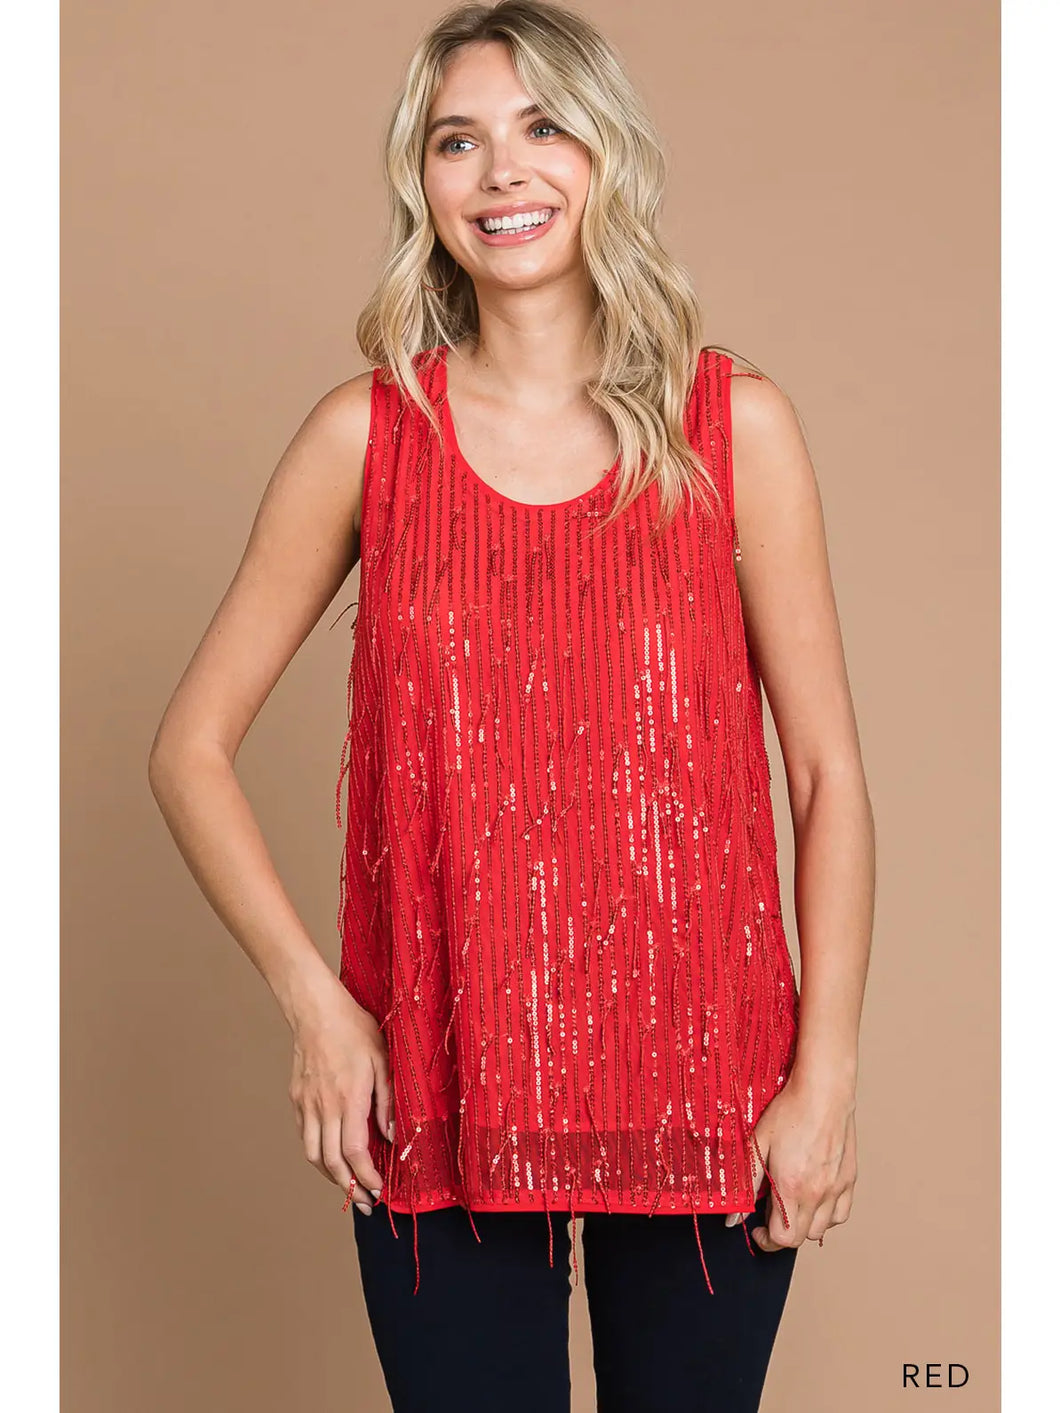 Women's Red Sequin Sleeveless Top - Athena's Fashion Boutique